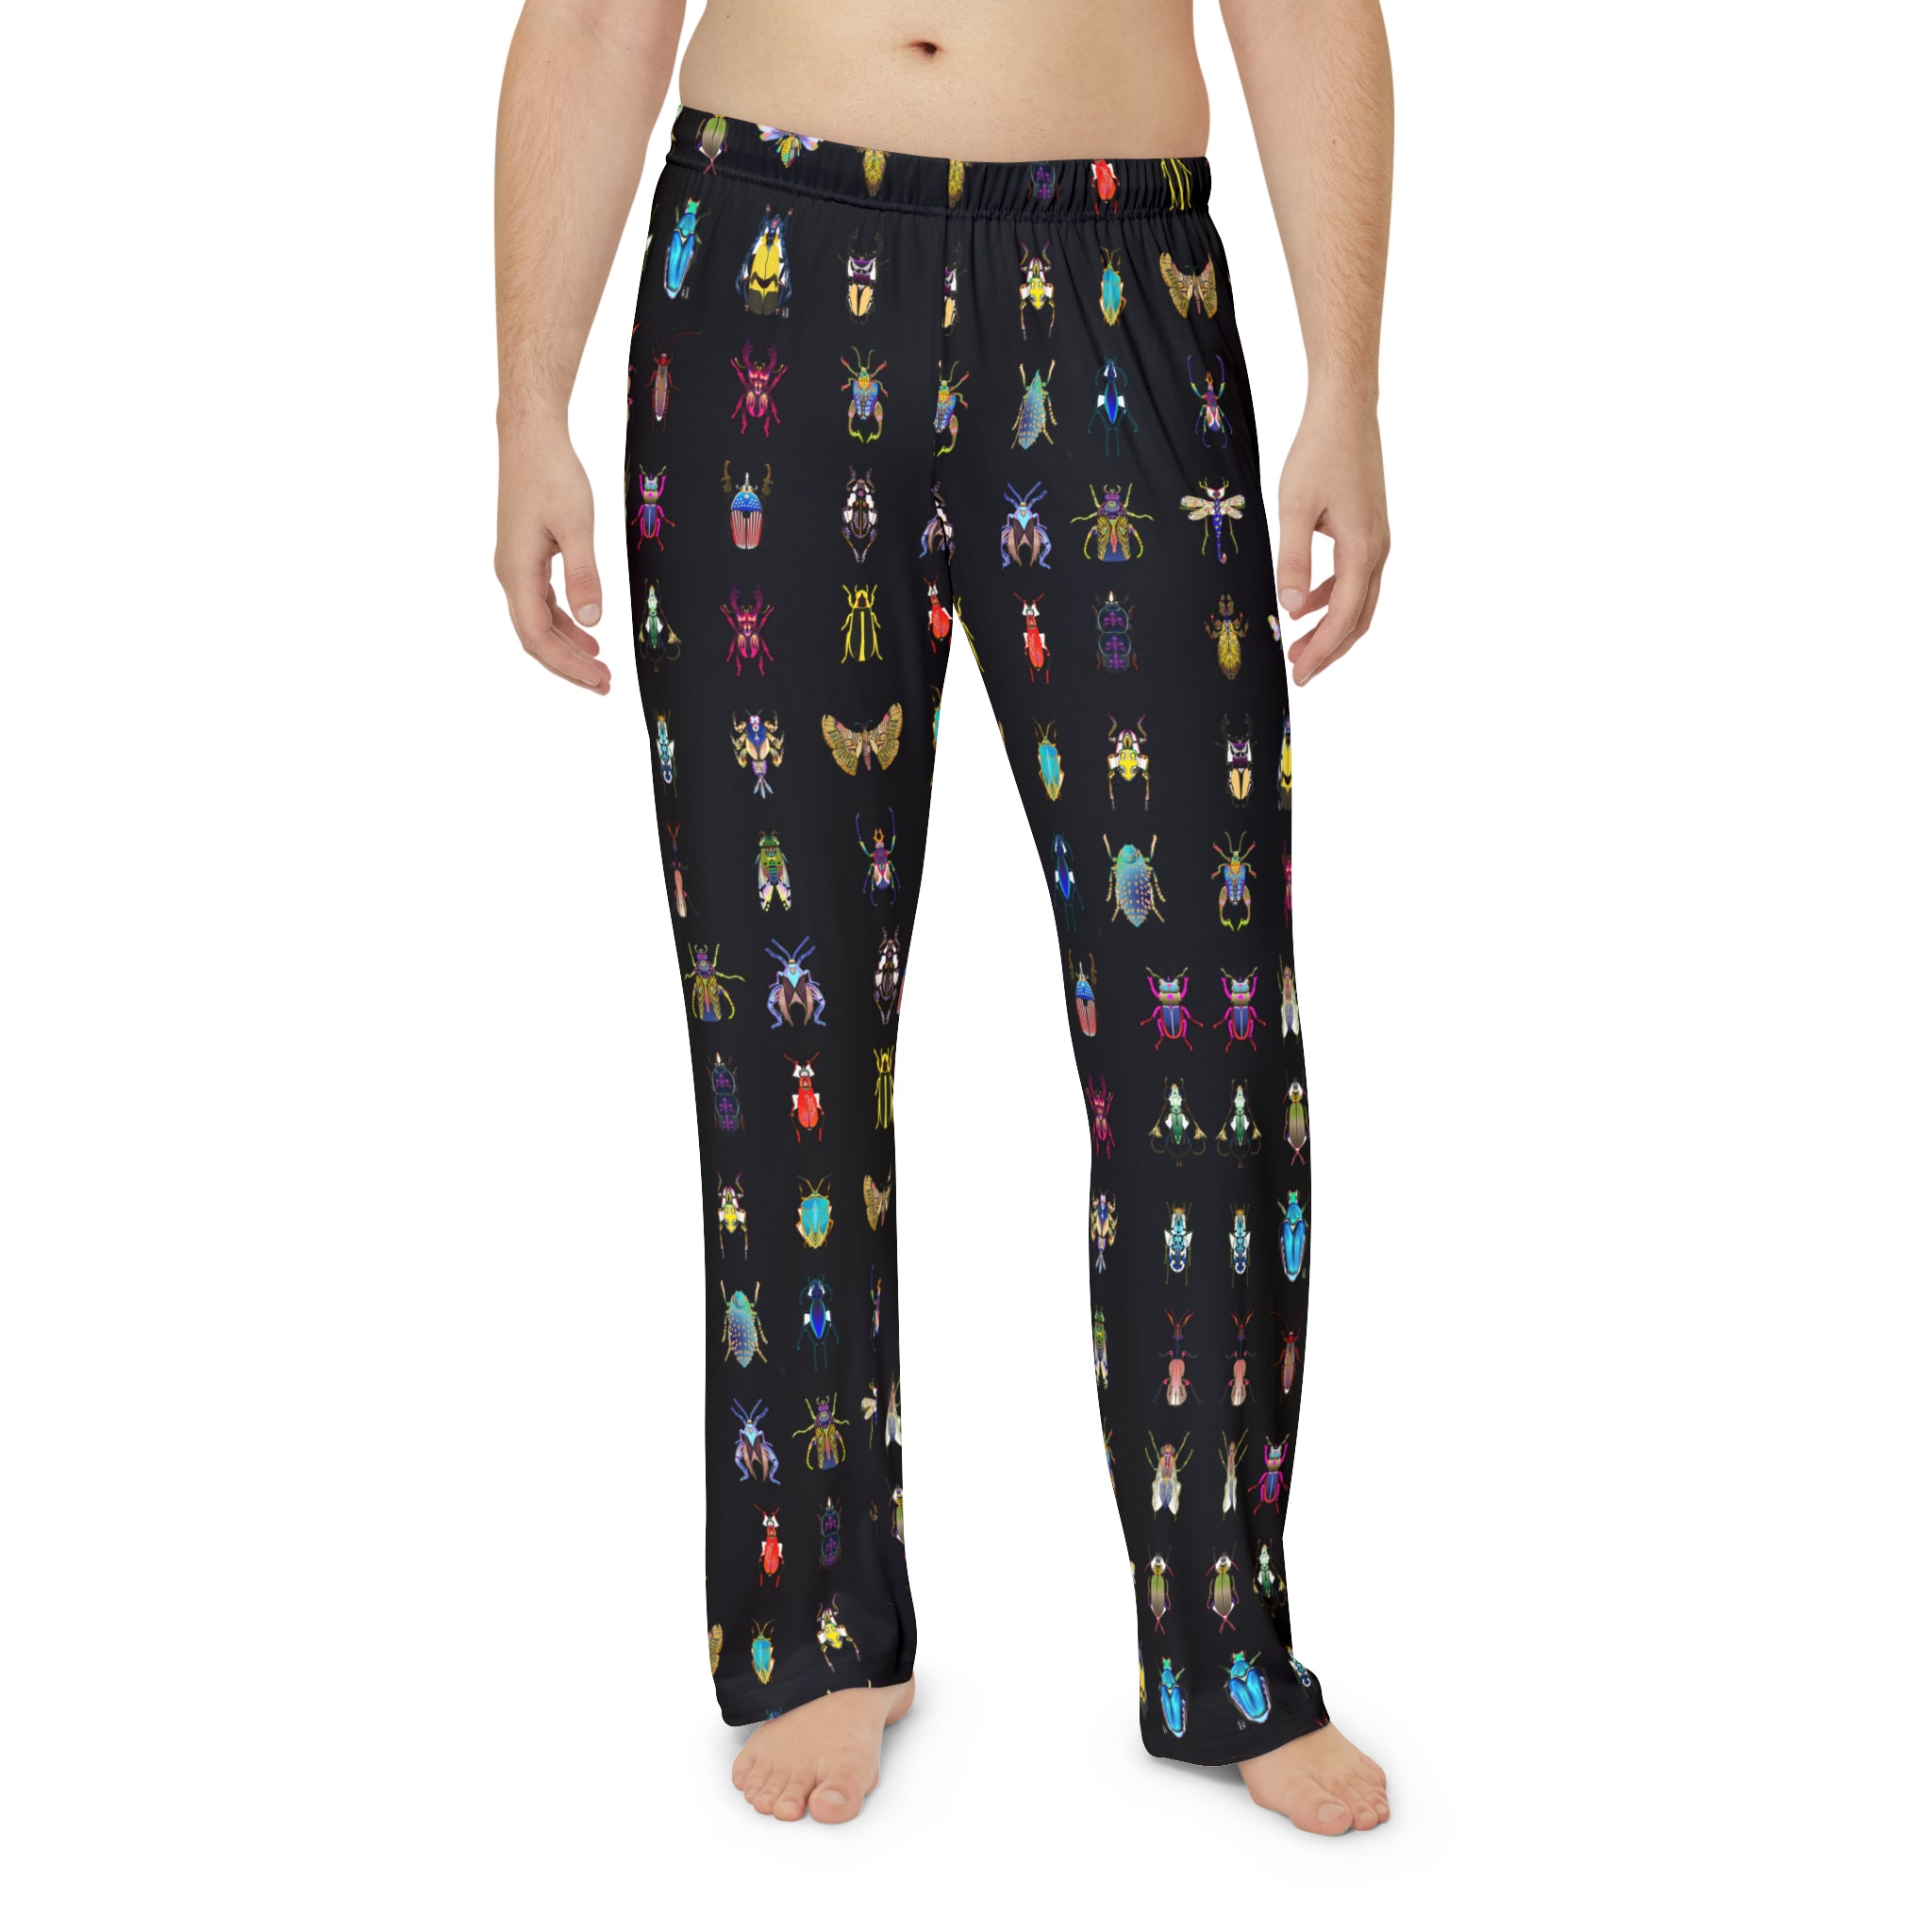 Shoosty Combo Black Men's Pajama Pants